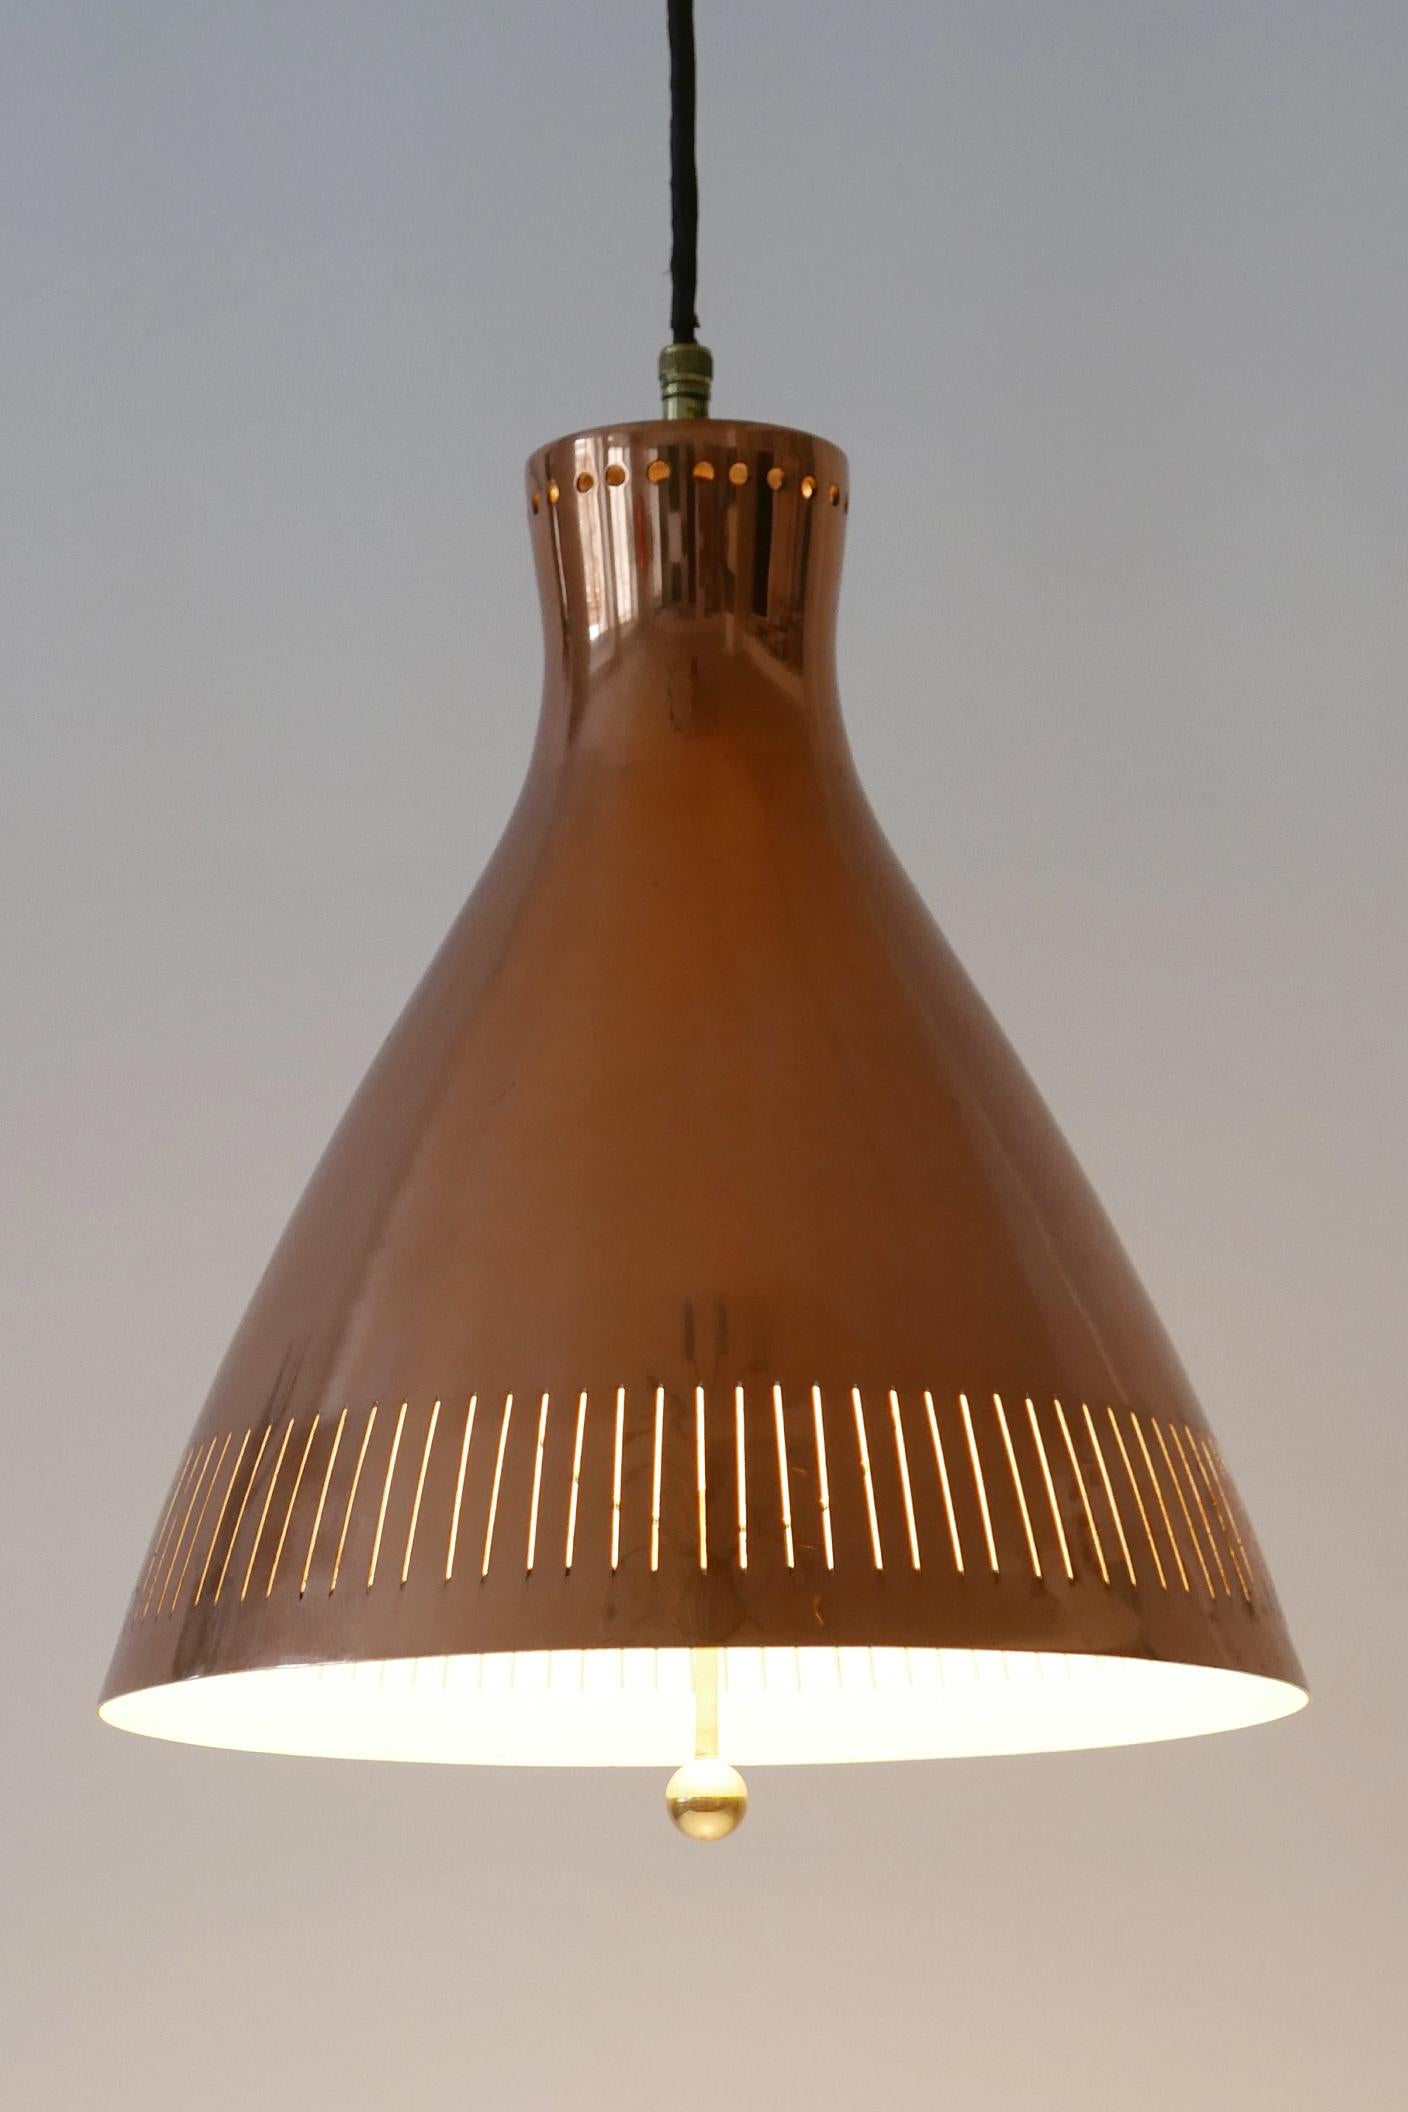 Mid-Century Modern Copper Pendant Lamp by Vereinigte Werkstätten 1960s Germany For Sale 3